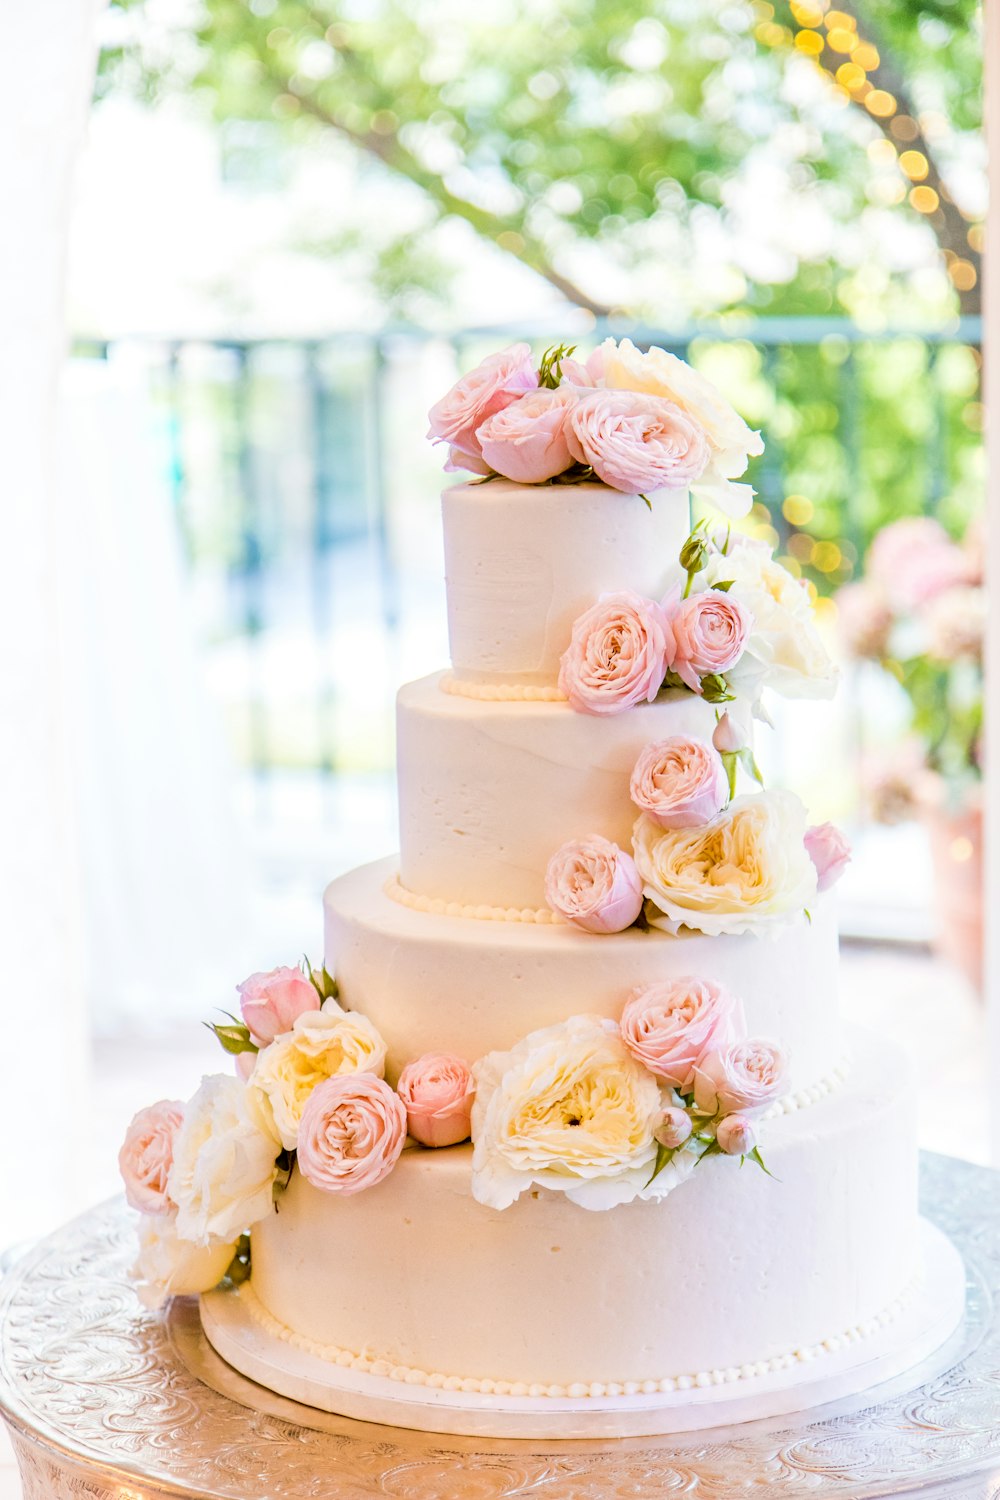 100+ Wedding Cake Pictures | Download Free Images on Unsplash